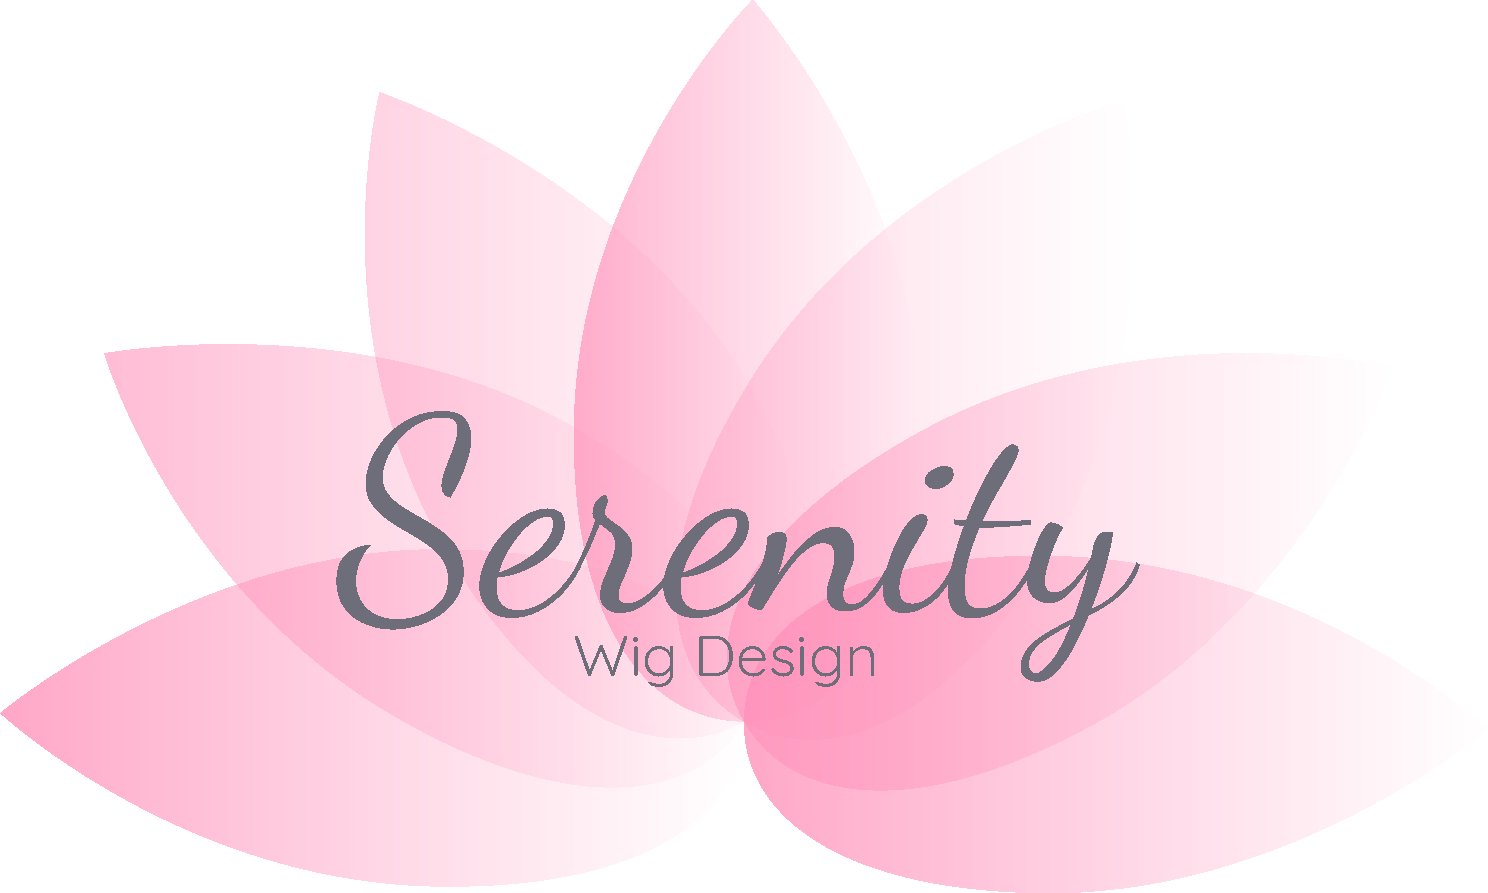 Serenity Wig Design